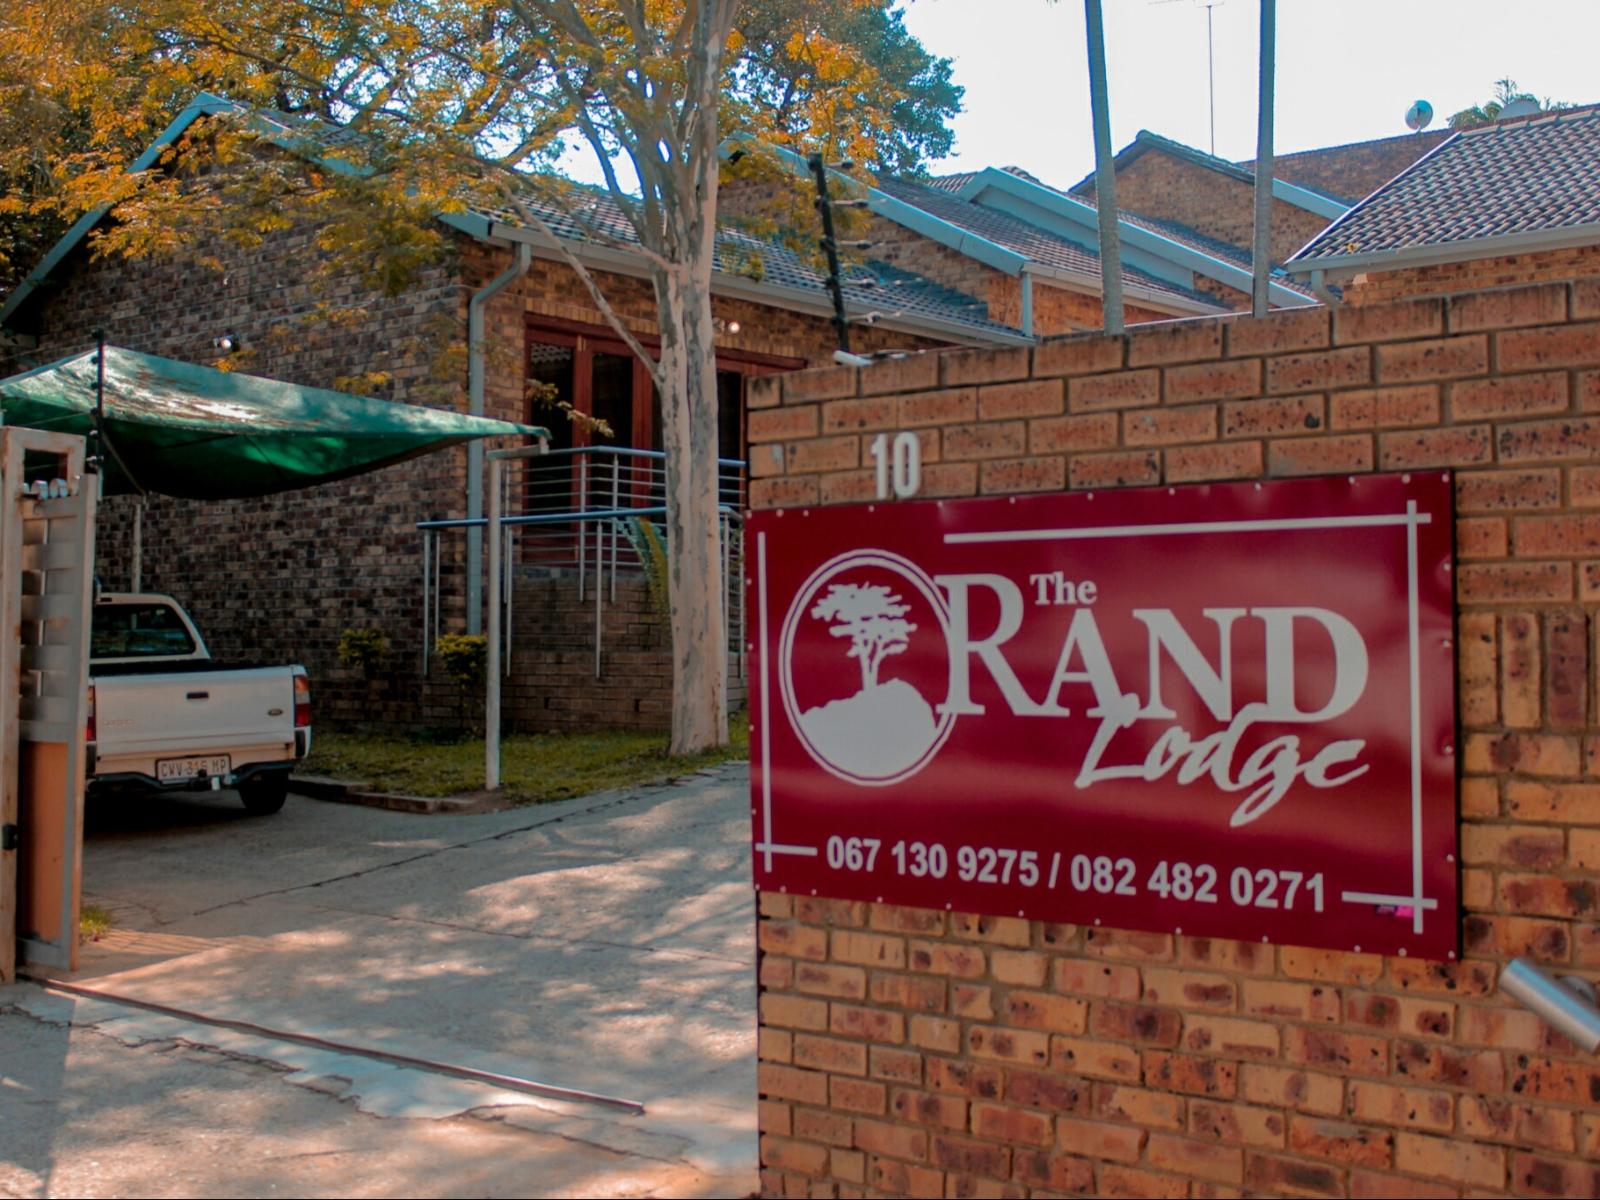 The Rand lodge